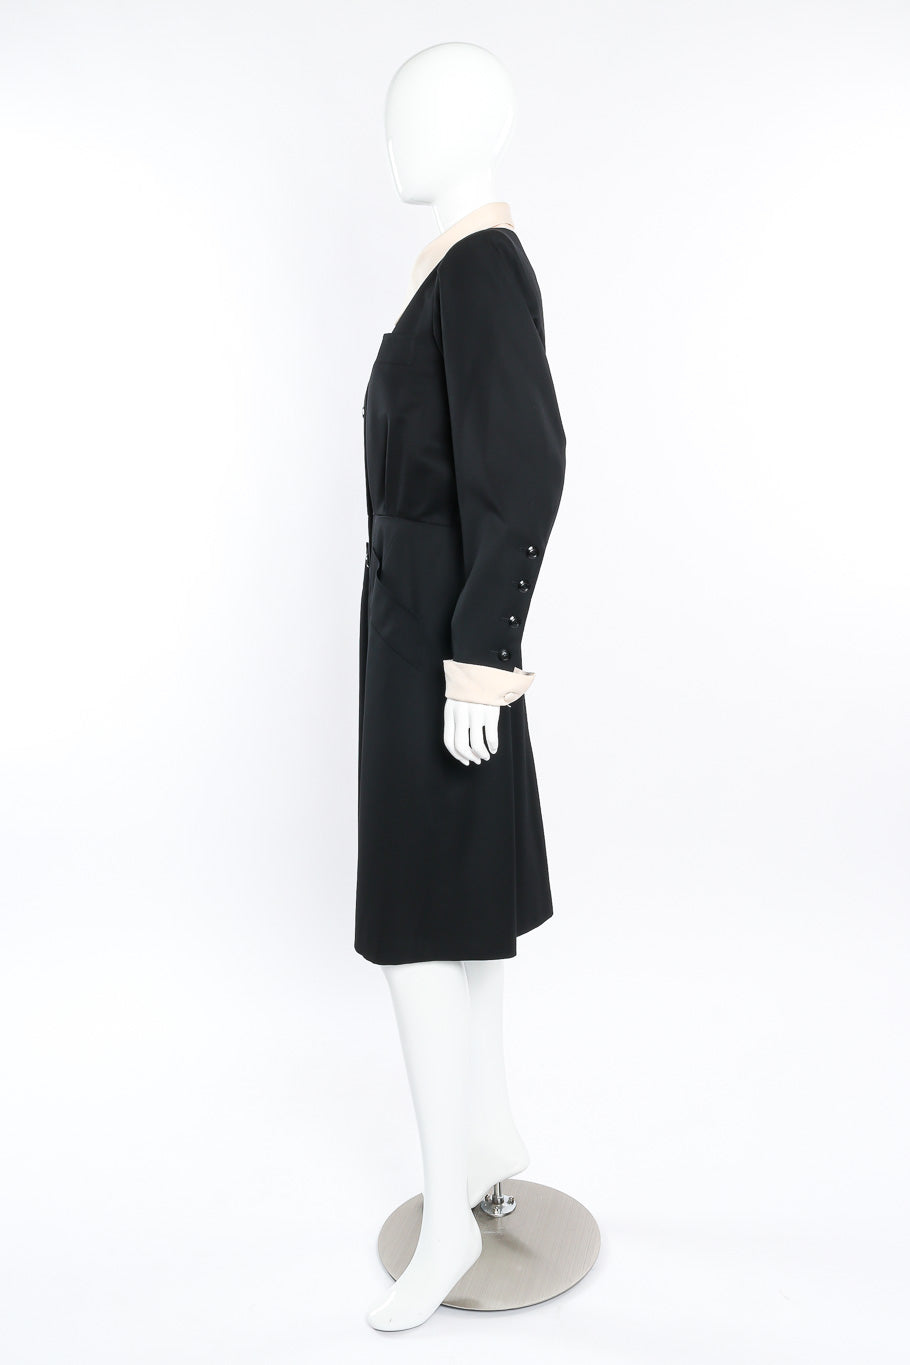 Vintage Yves Saint Laurent Collared Blazer Dress side view on mannequin @Recessla